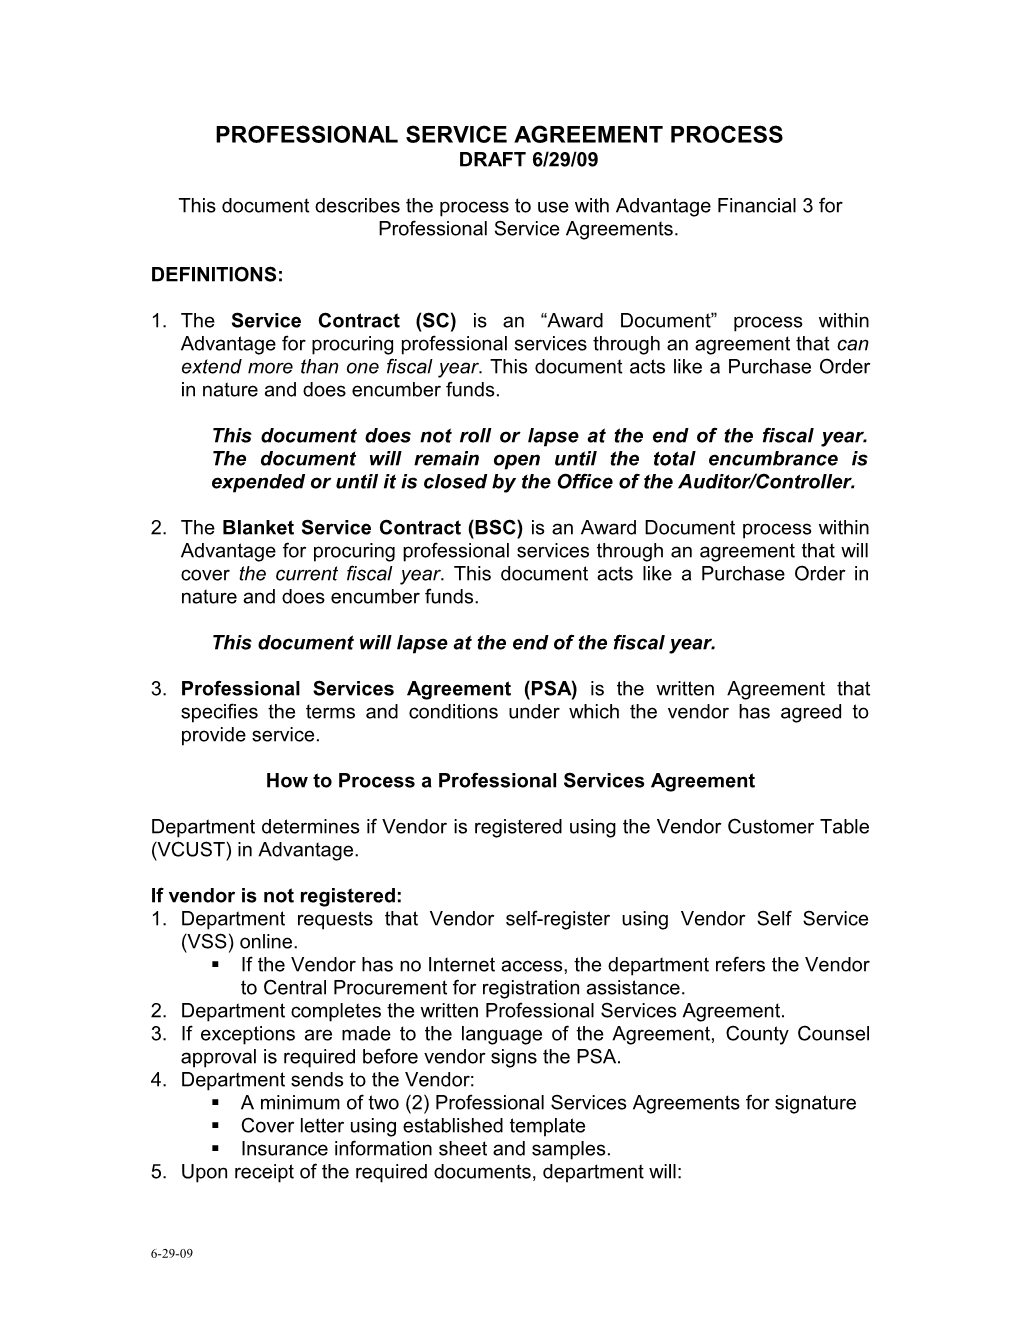 Professional Service Agreement Process Draft 6/29/09